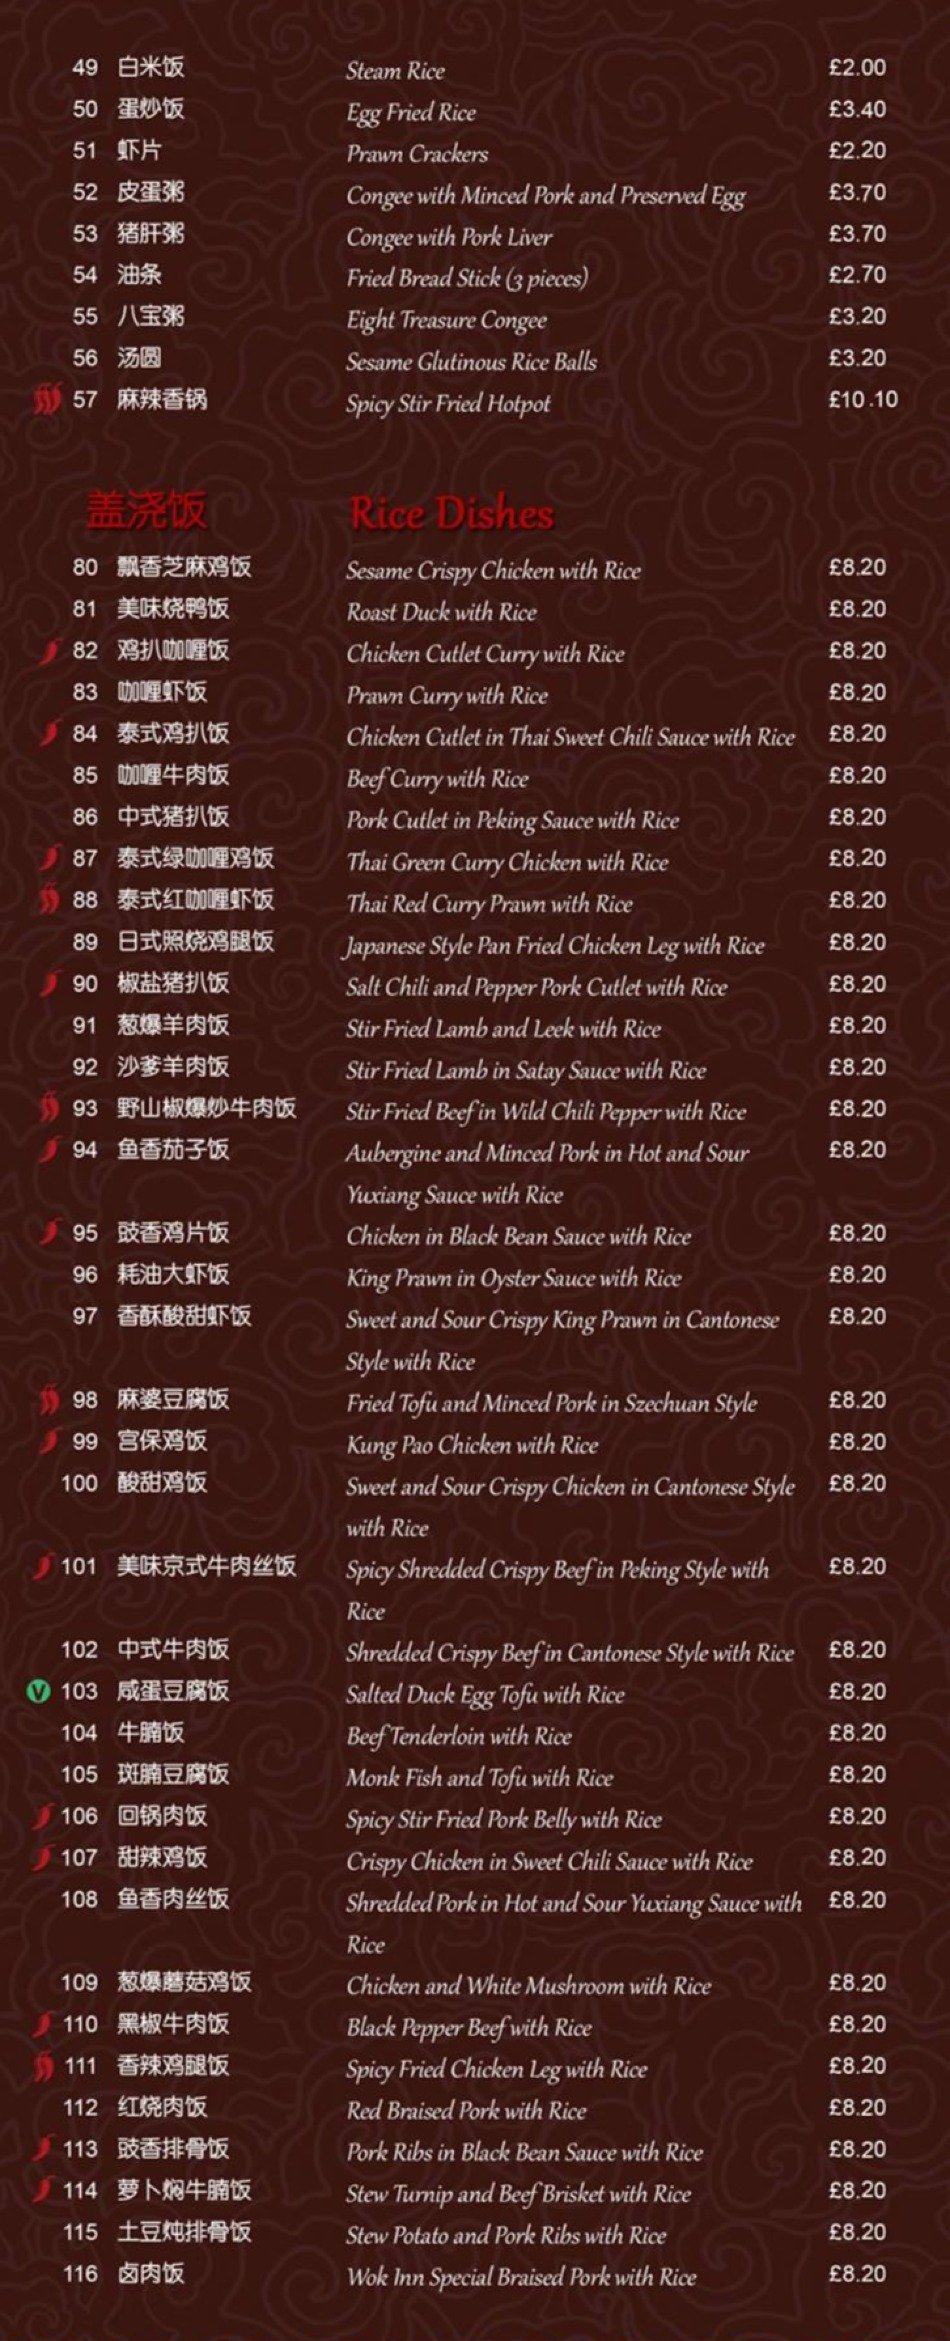 Takeaway Restaurant Menu Page - Wok Inn Chinese restaurant - Newcastle upon Tyne